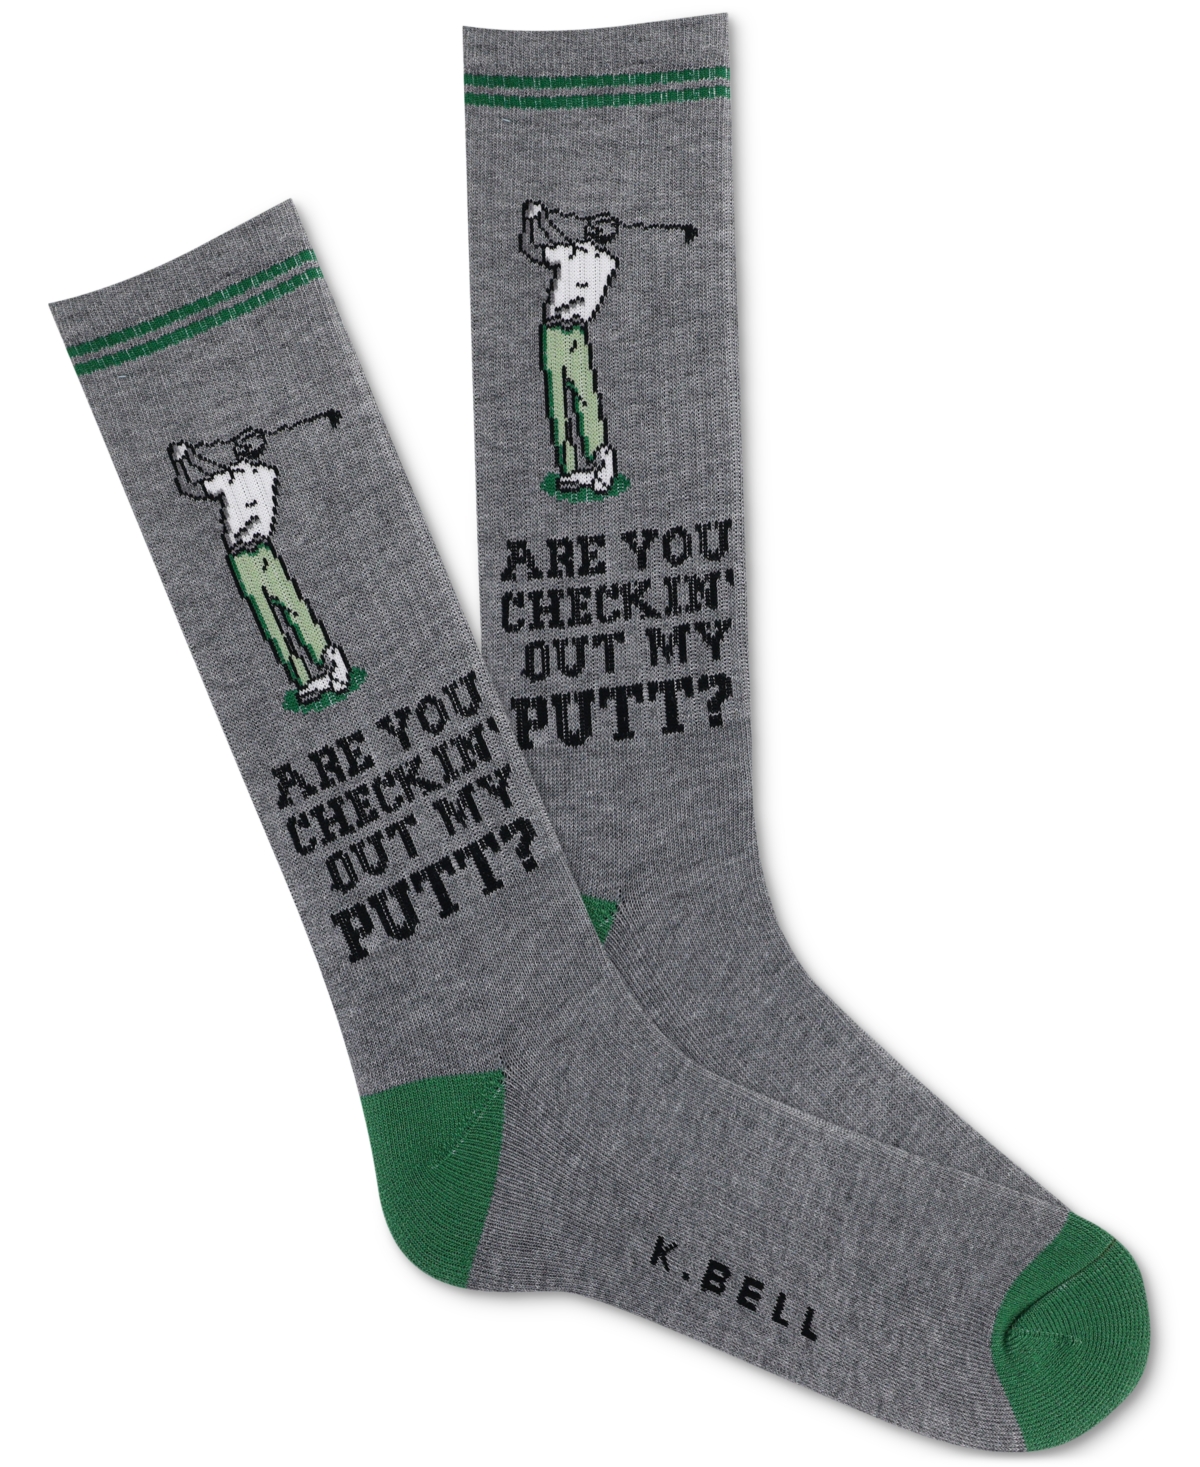 K. Bell Socks Men's Checkin' Out My Putt Crew Socks - Medium Grey